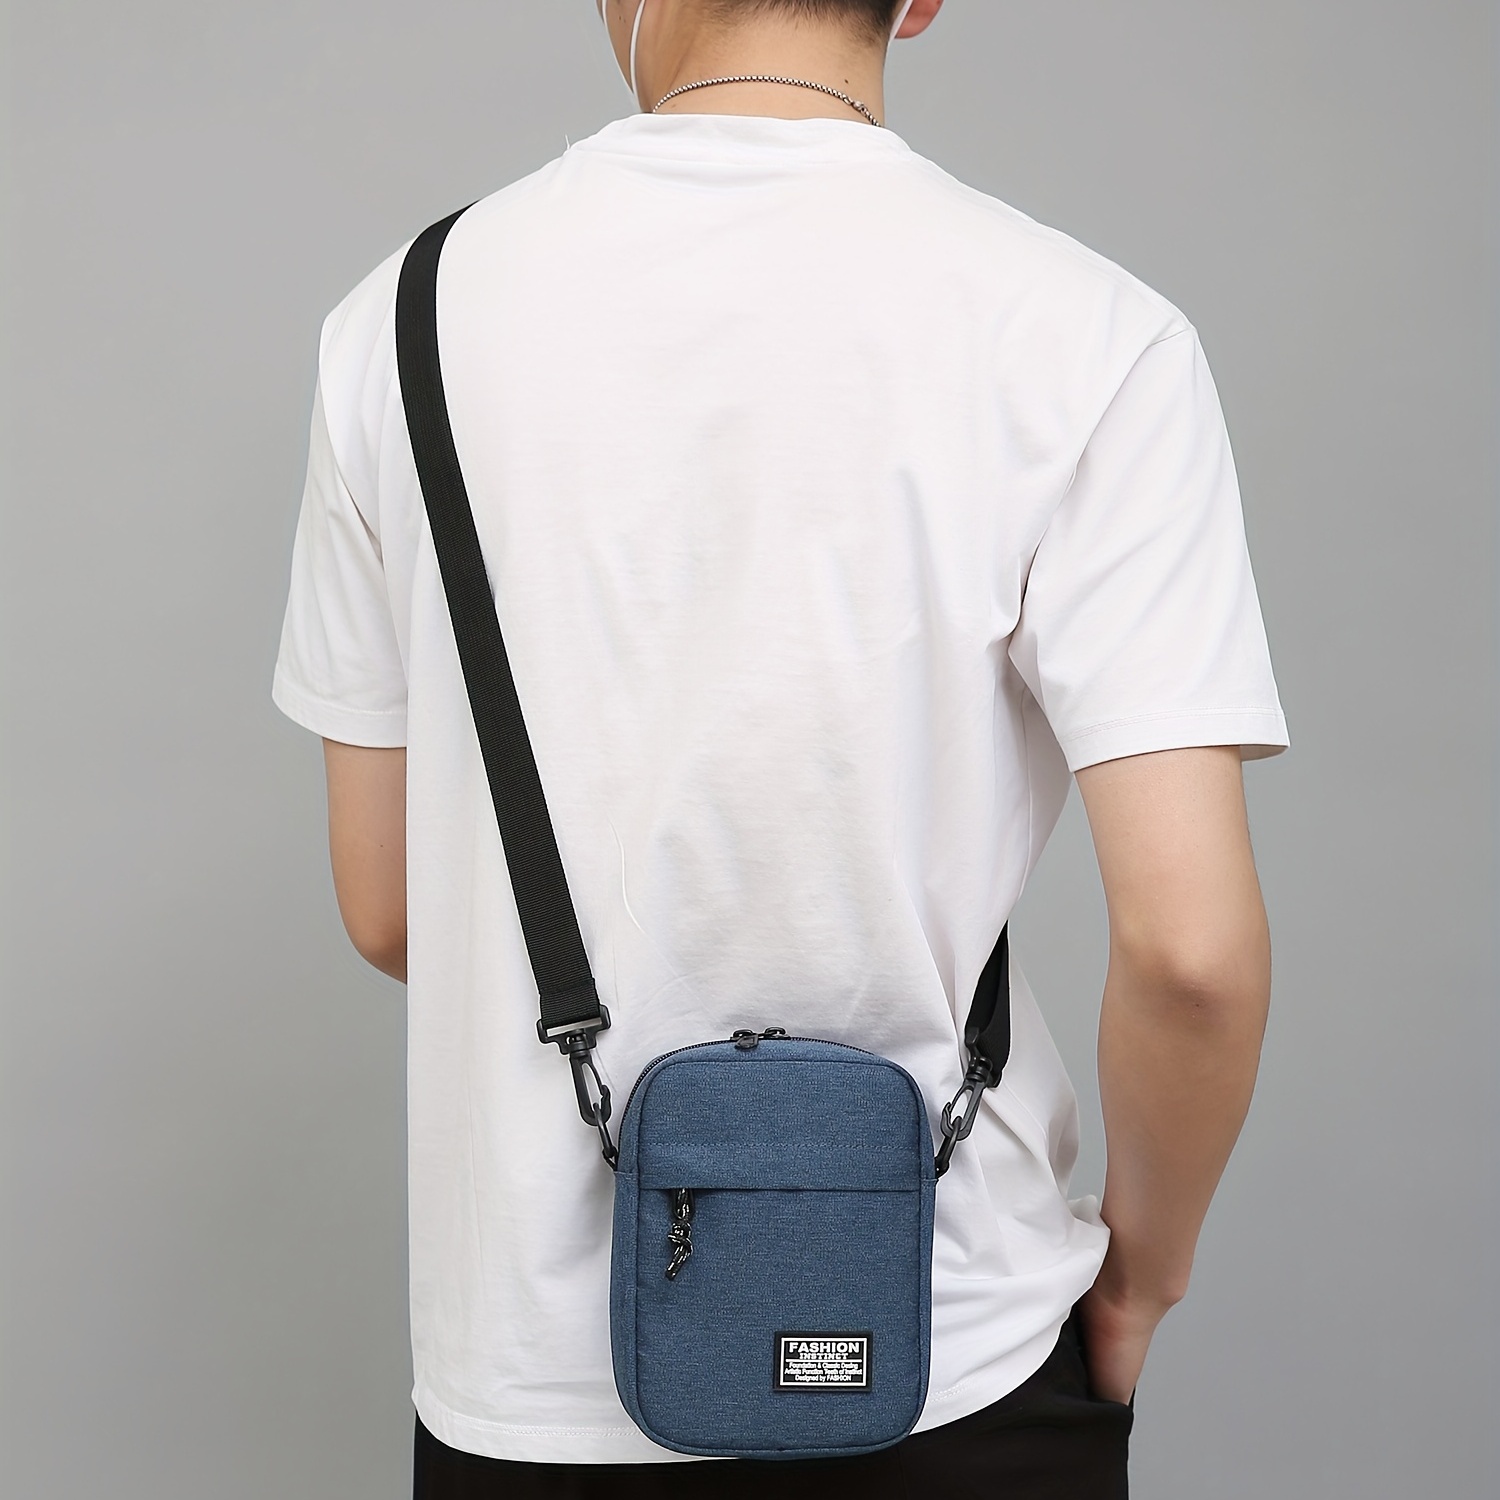 Men's Simple Casual Crossbody Bag, Fashion Messenger Bag, Small